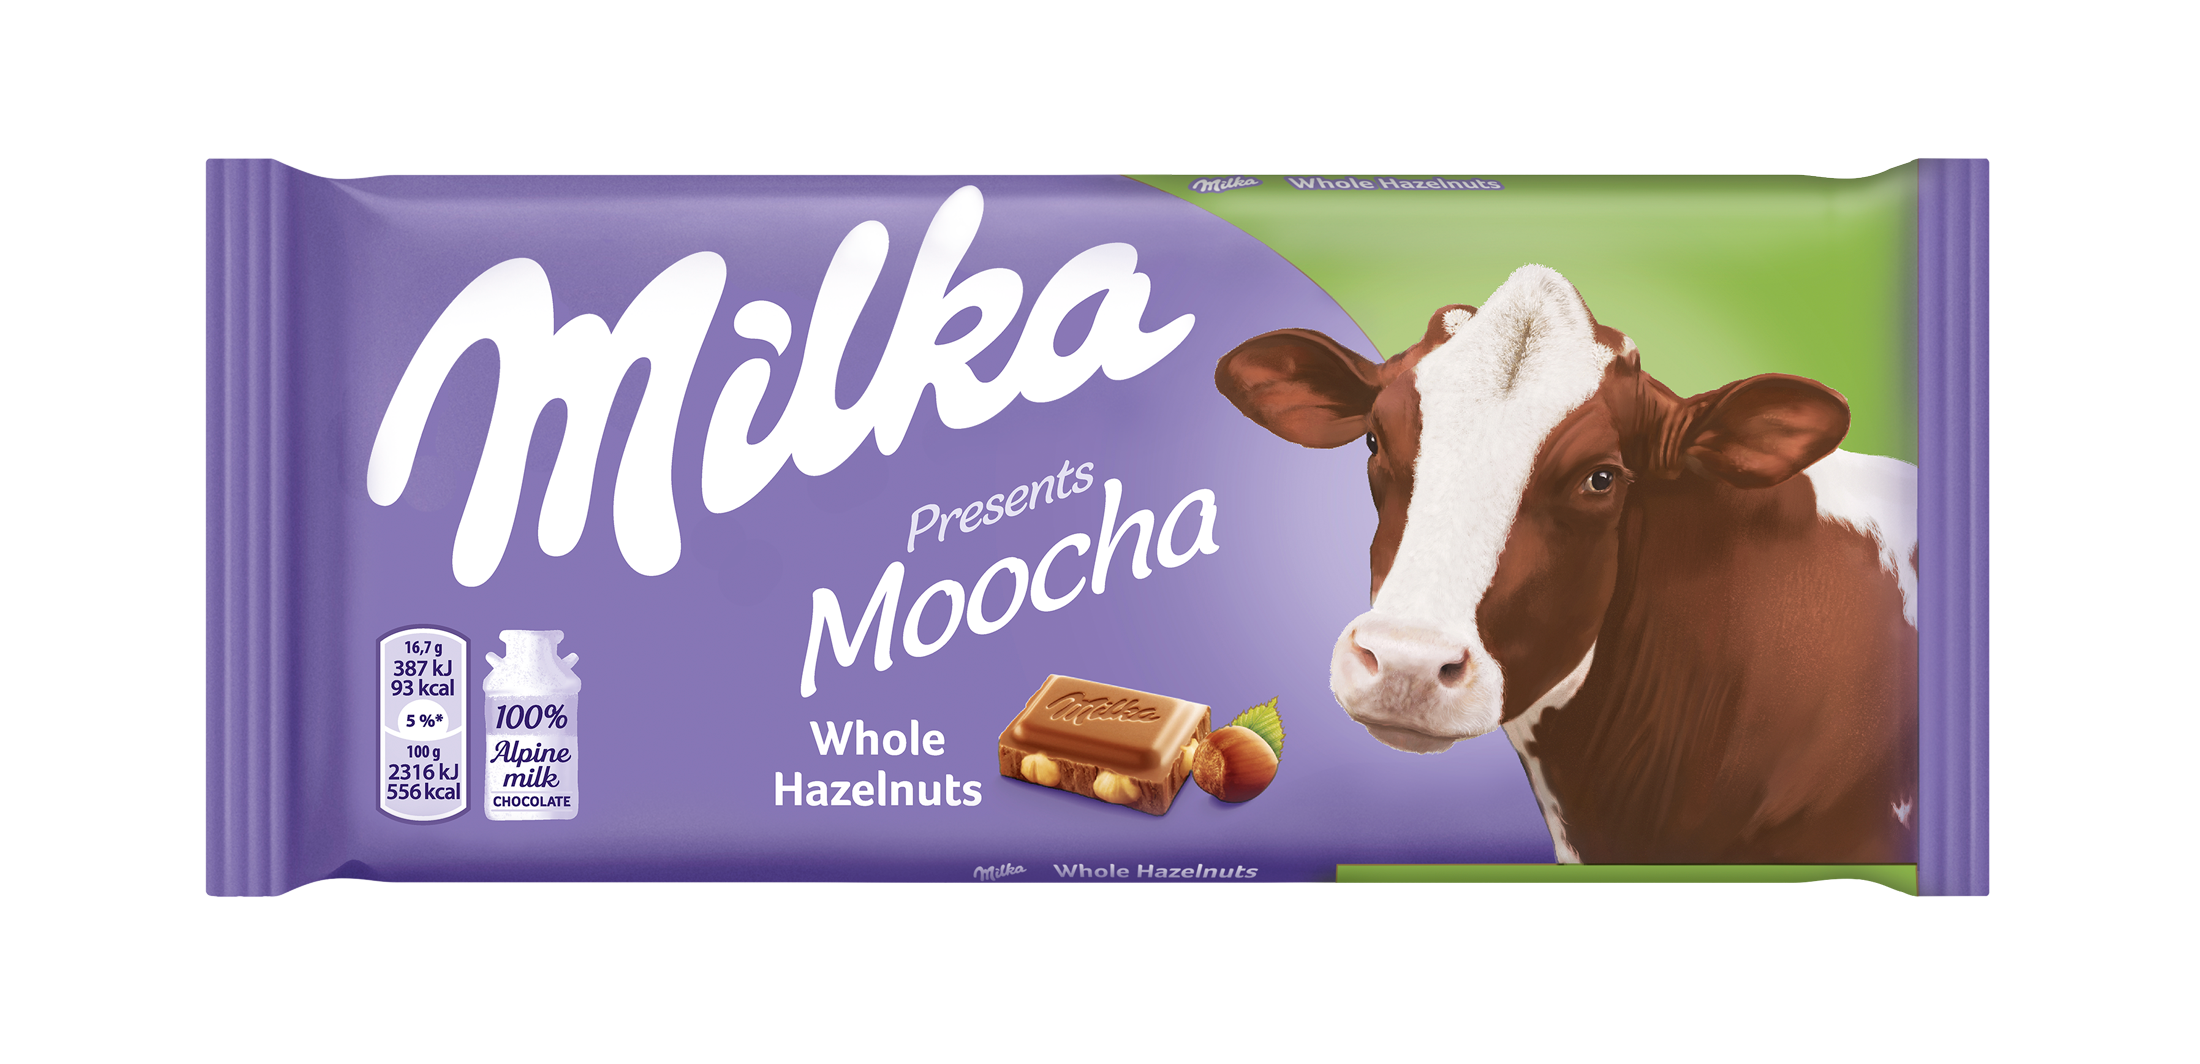 622020-Moocha-Whole-hazelnuts-100-g